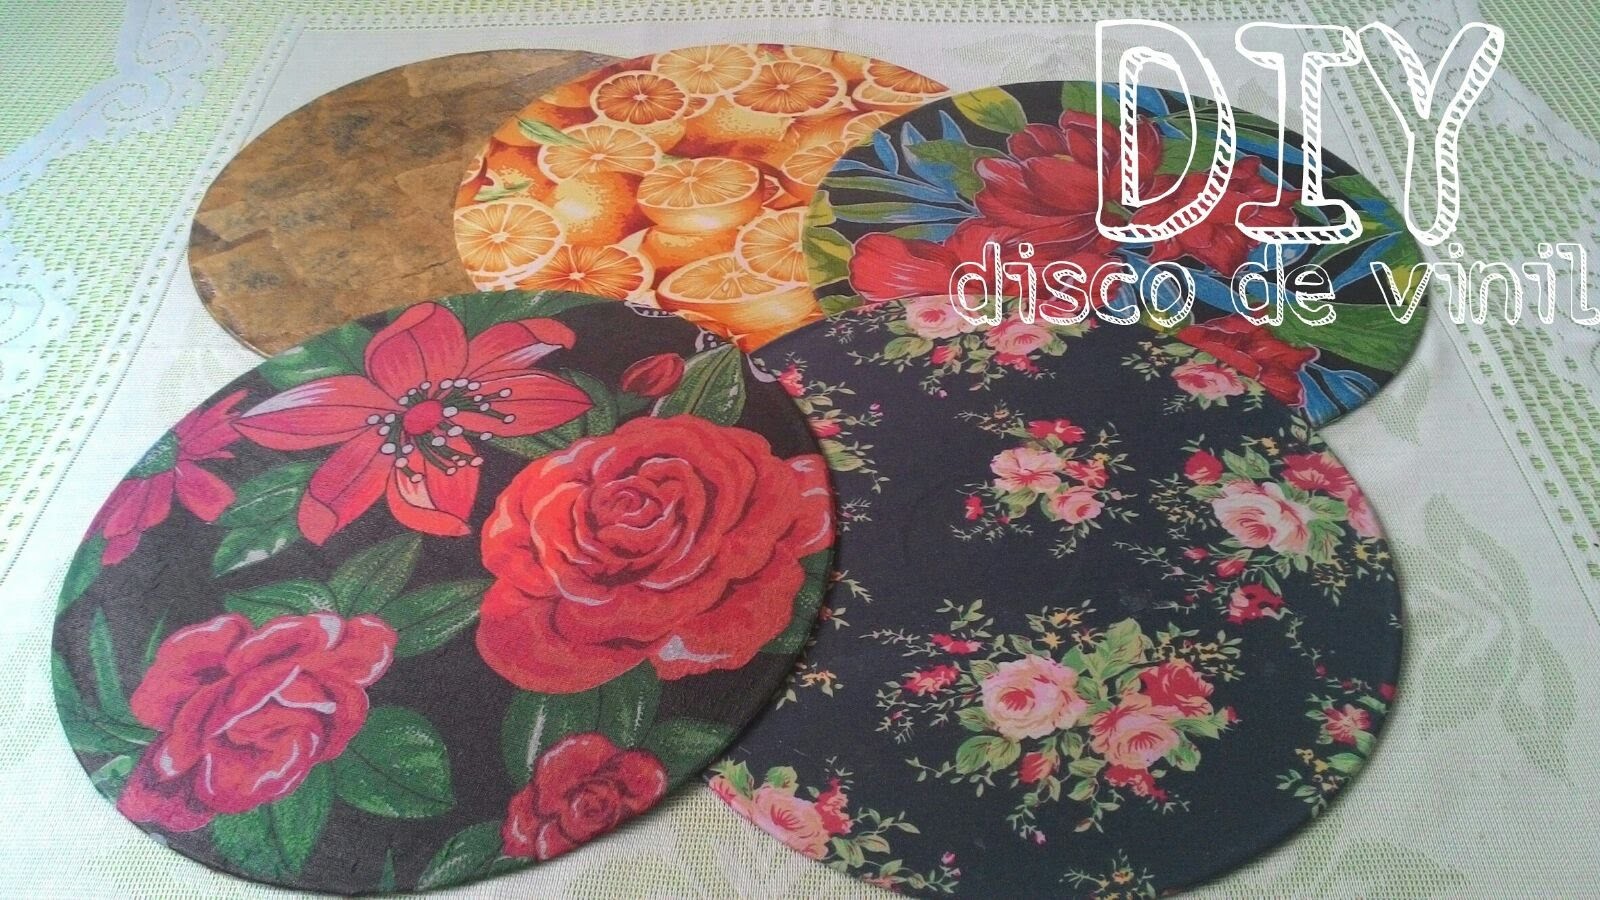 DIY - Disco de vinil(LP) encapado com tecido